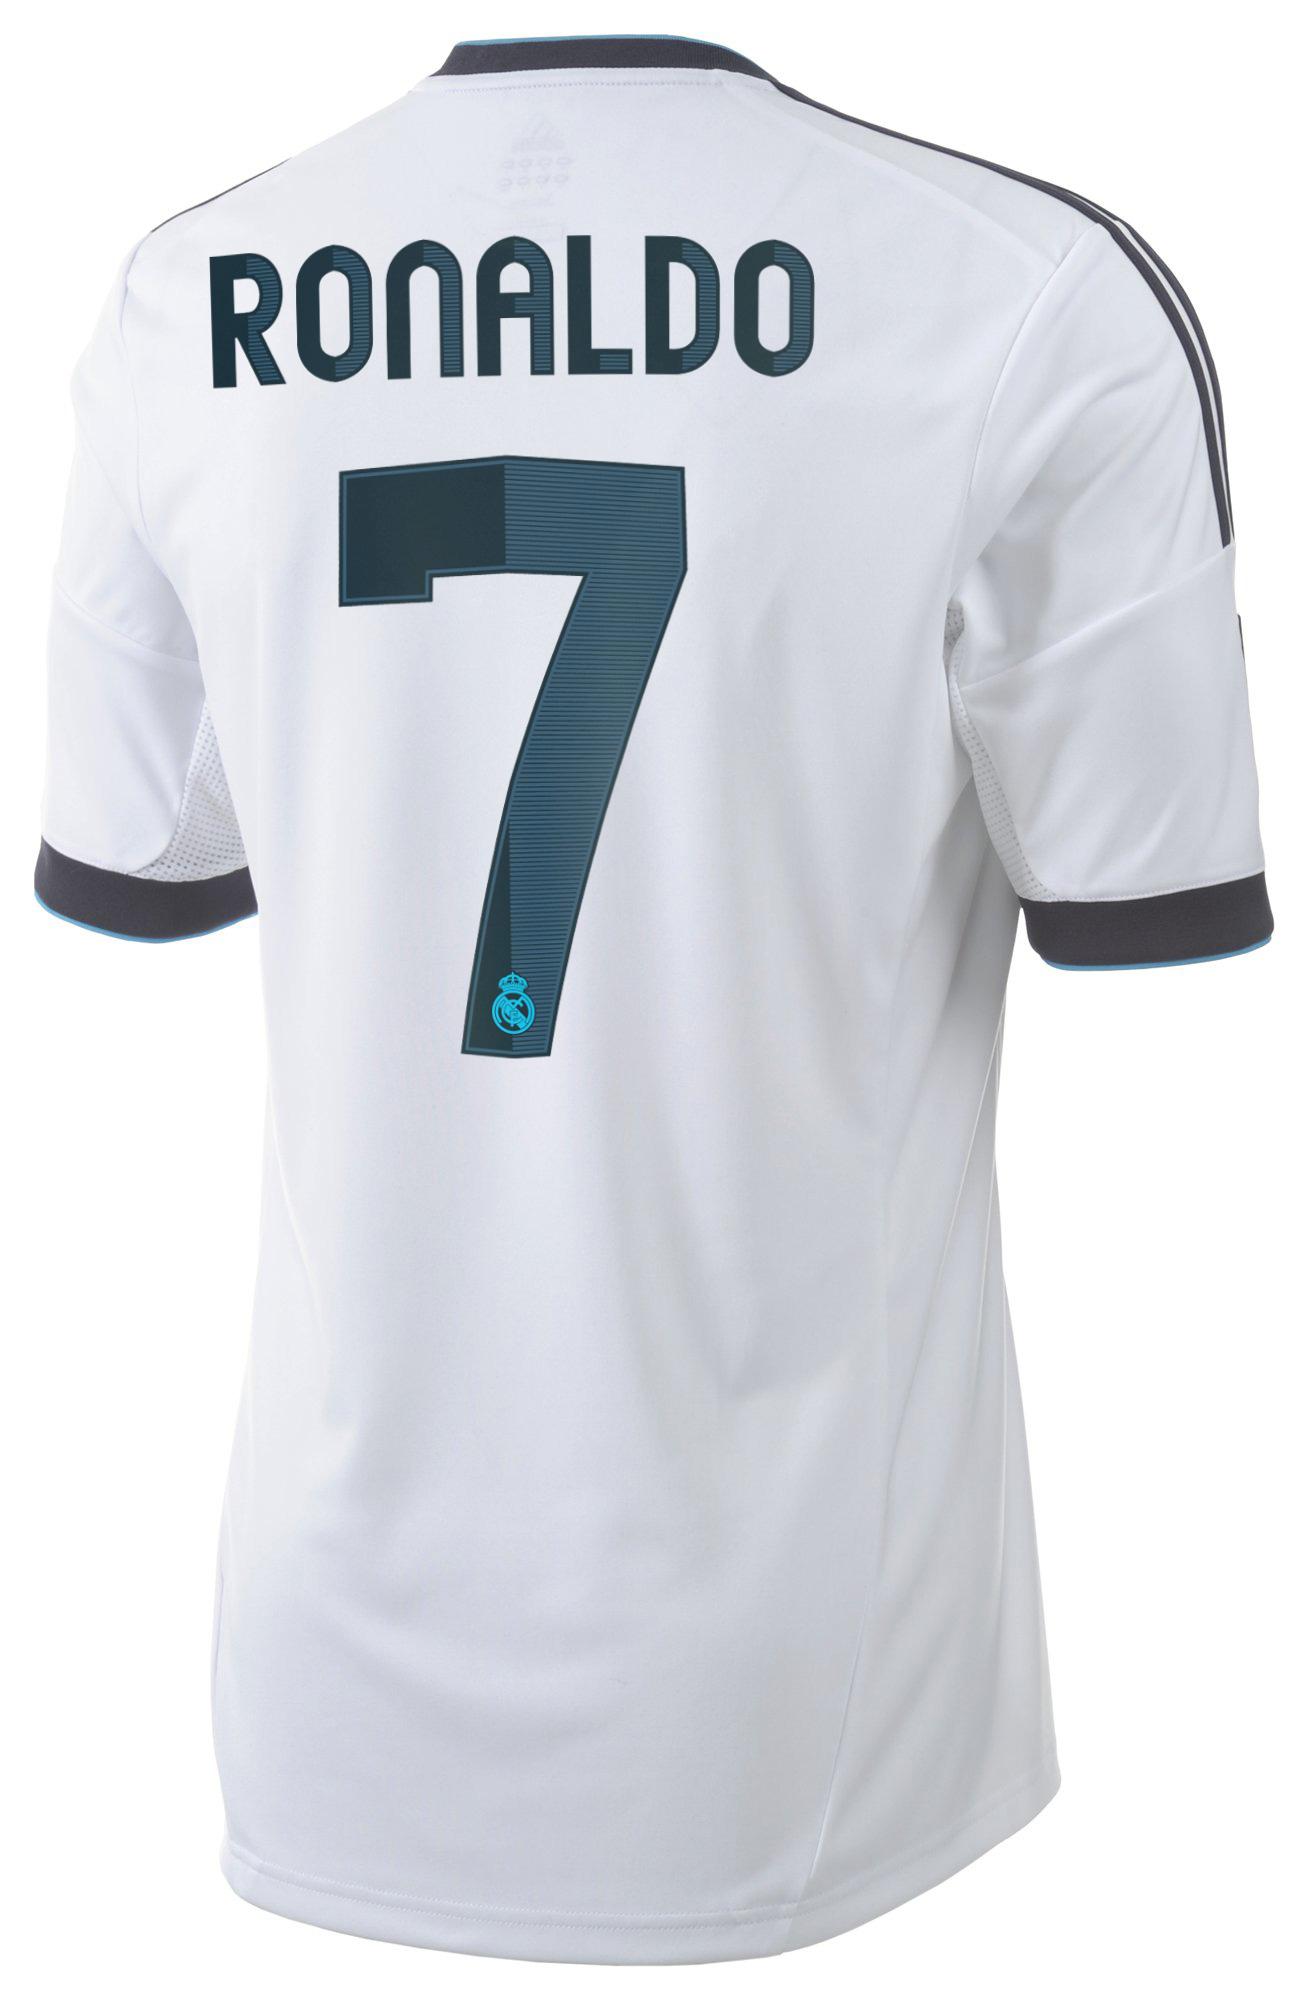 Foto adidas Real Madrid Home Jersey - Ronaldo 7 foto 2798